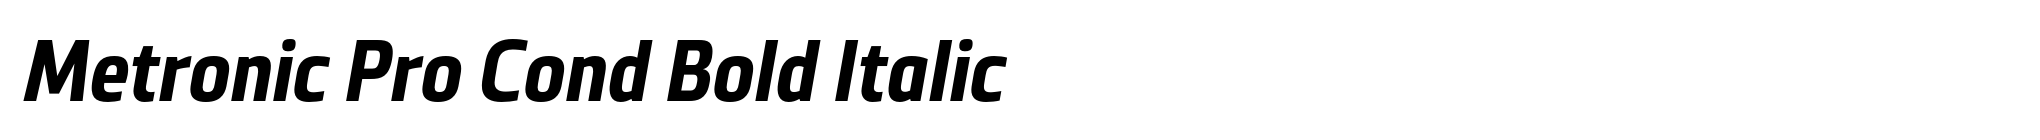 Metronic Pro Cond Bold Italic image